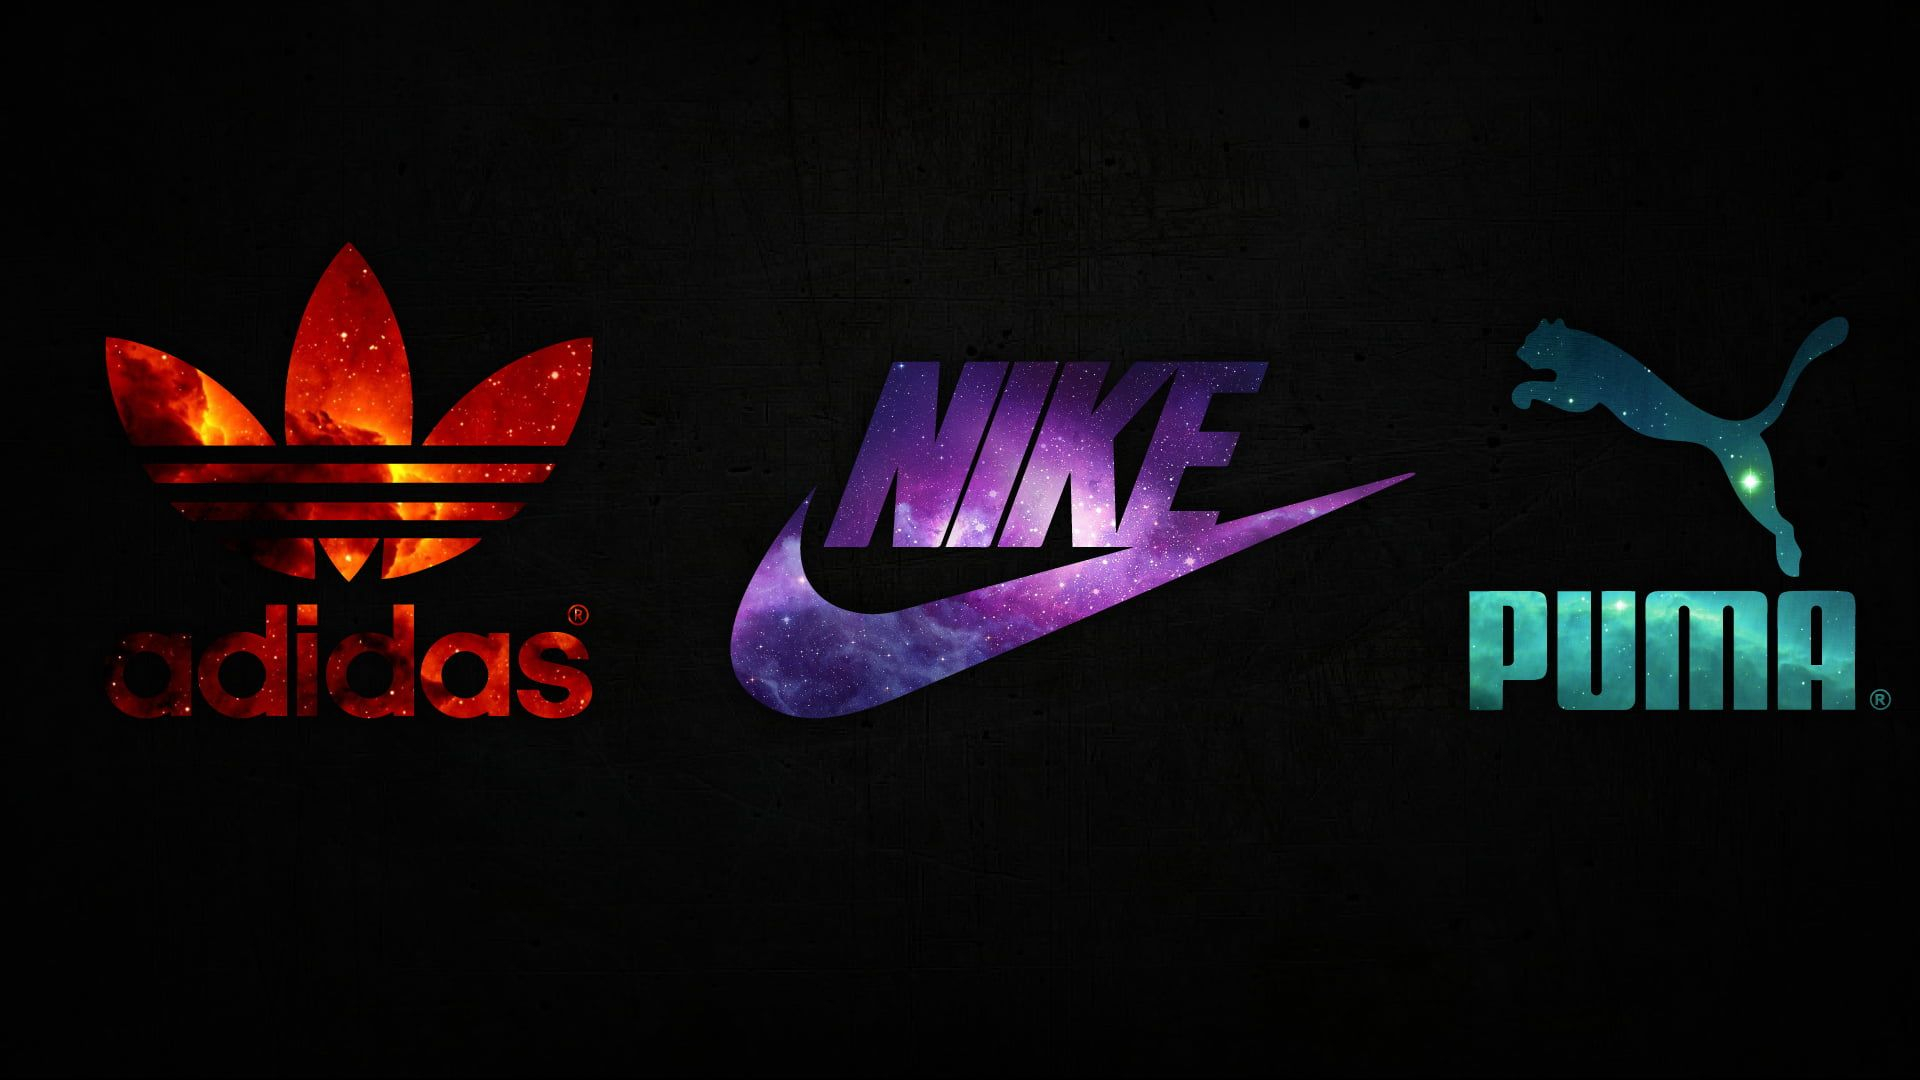 1920x1080 Nike #Adidas #Puma #space #logo #1080P #wallpaper #hdwallpaper #desktop | Jordan logo wallpaper, Adidas logo wallpapers, Adidas wallpapers